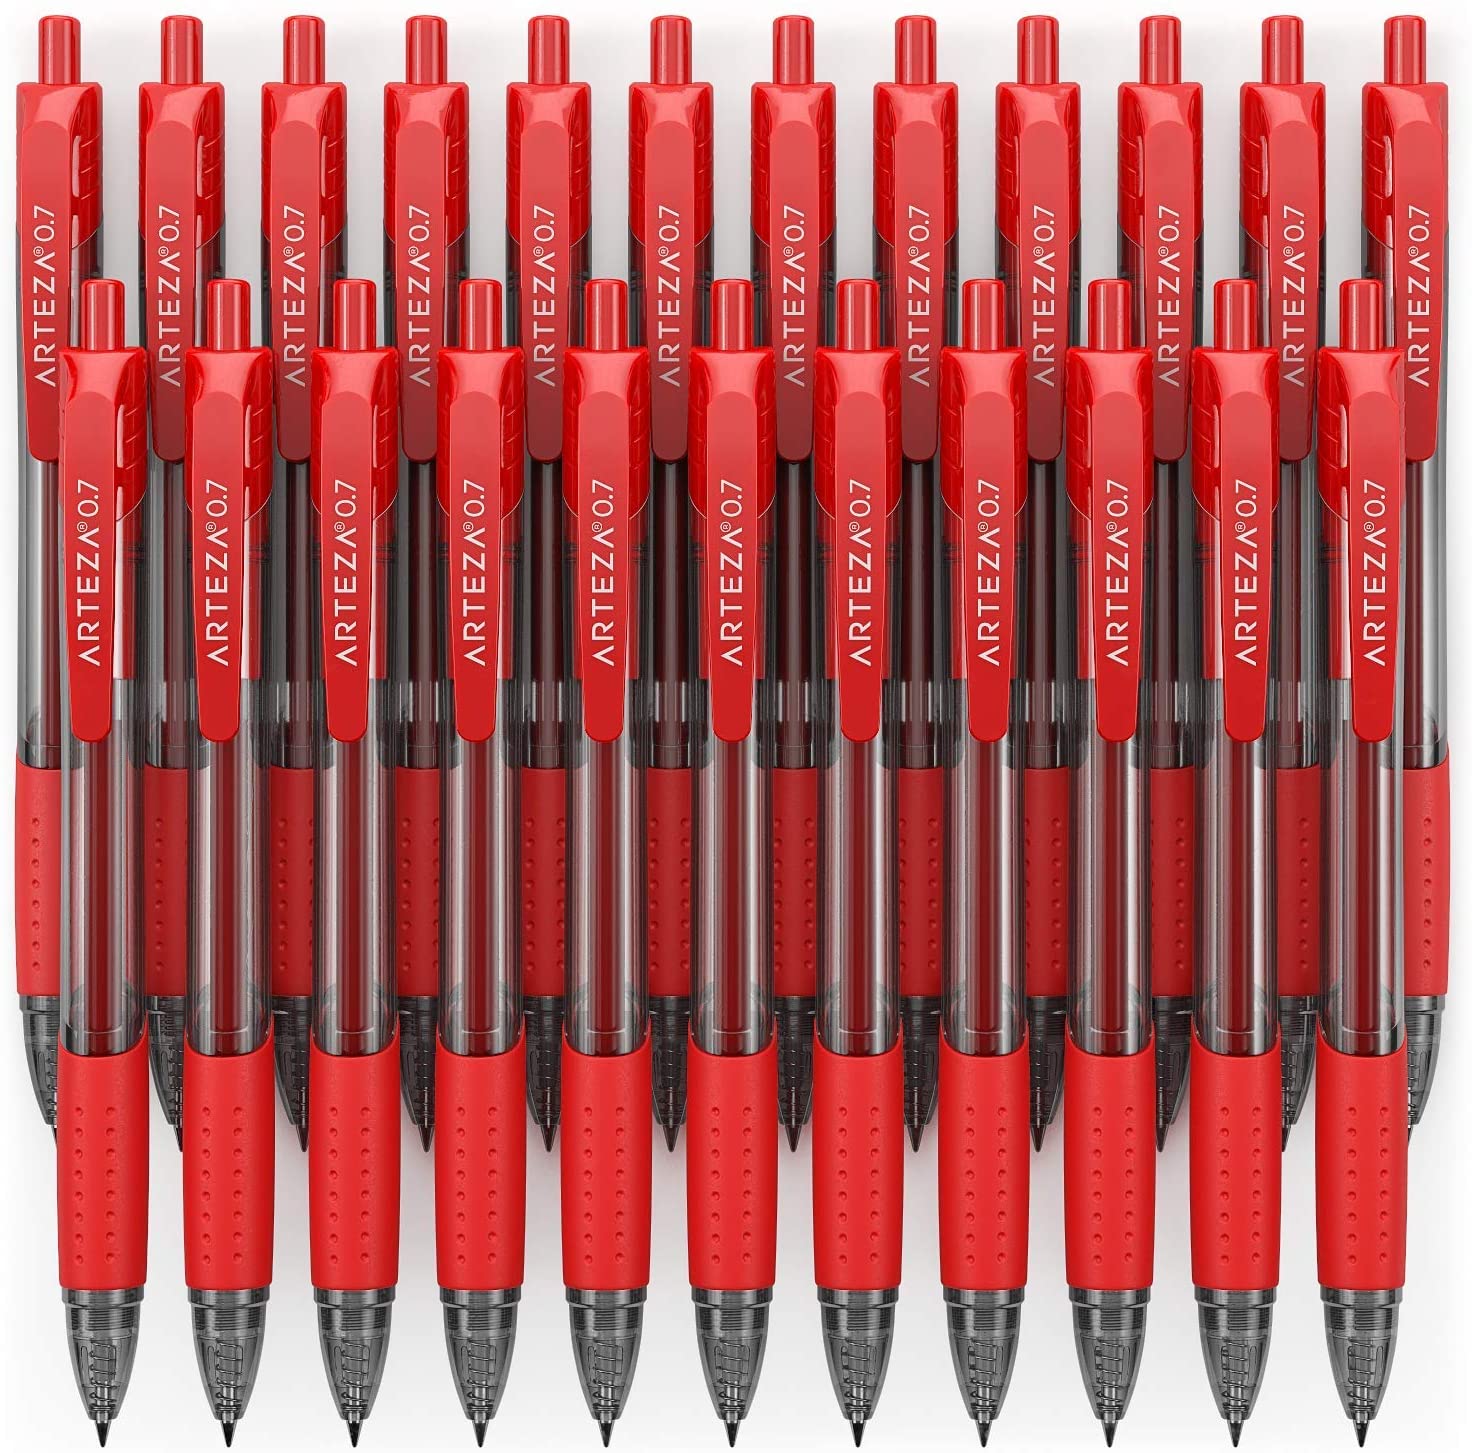 Arteza RNAB084HBL7XF arteza colored gel pens, pack of 14, unique vibrant  colors, fine 0.7 mm tip, retractable, art supplies for journaling, drawin